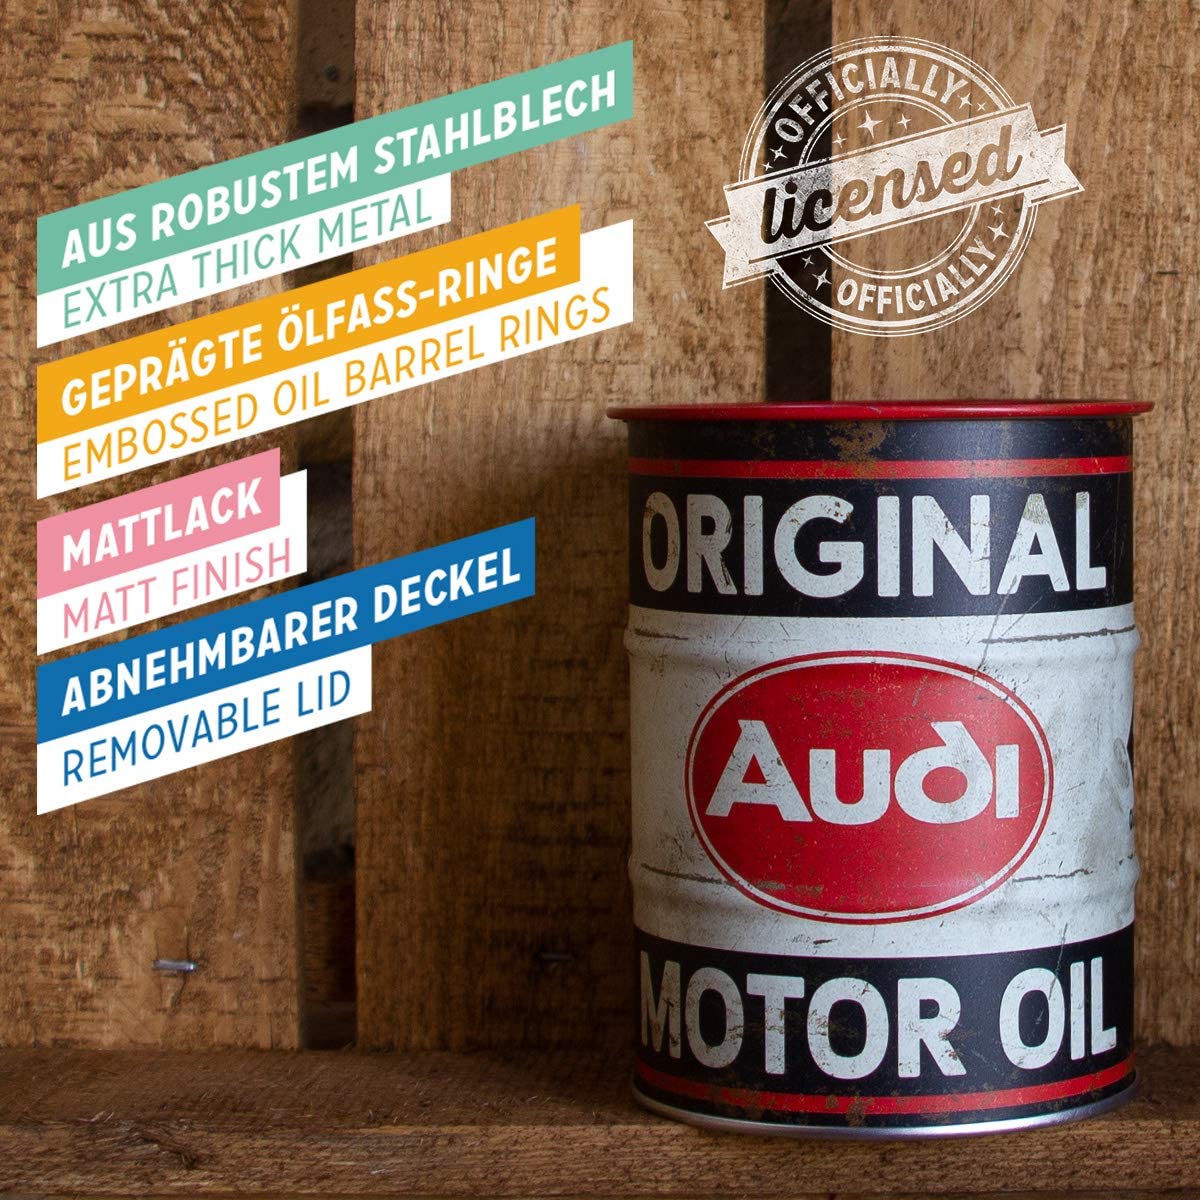 Pusculita Audi - Original Motor Oil 